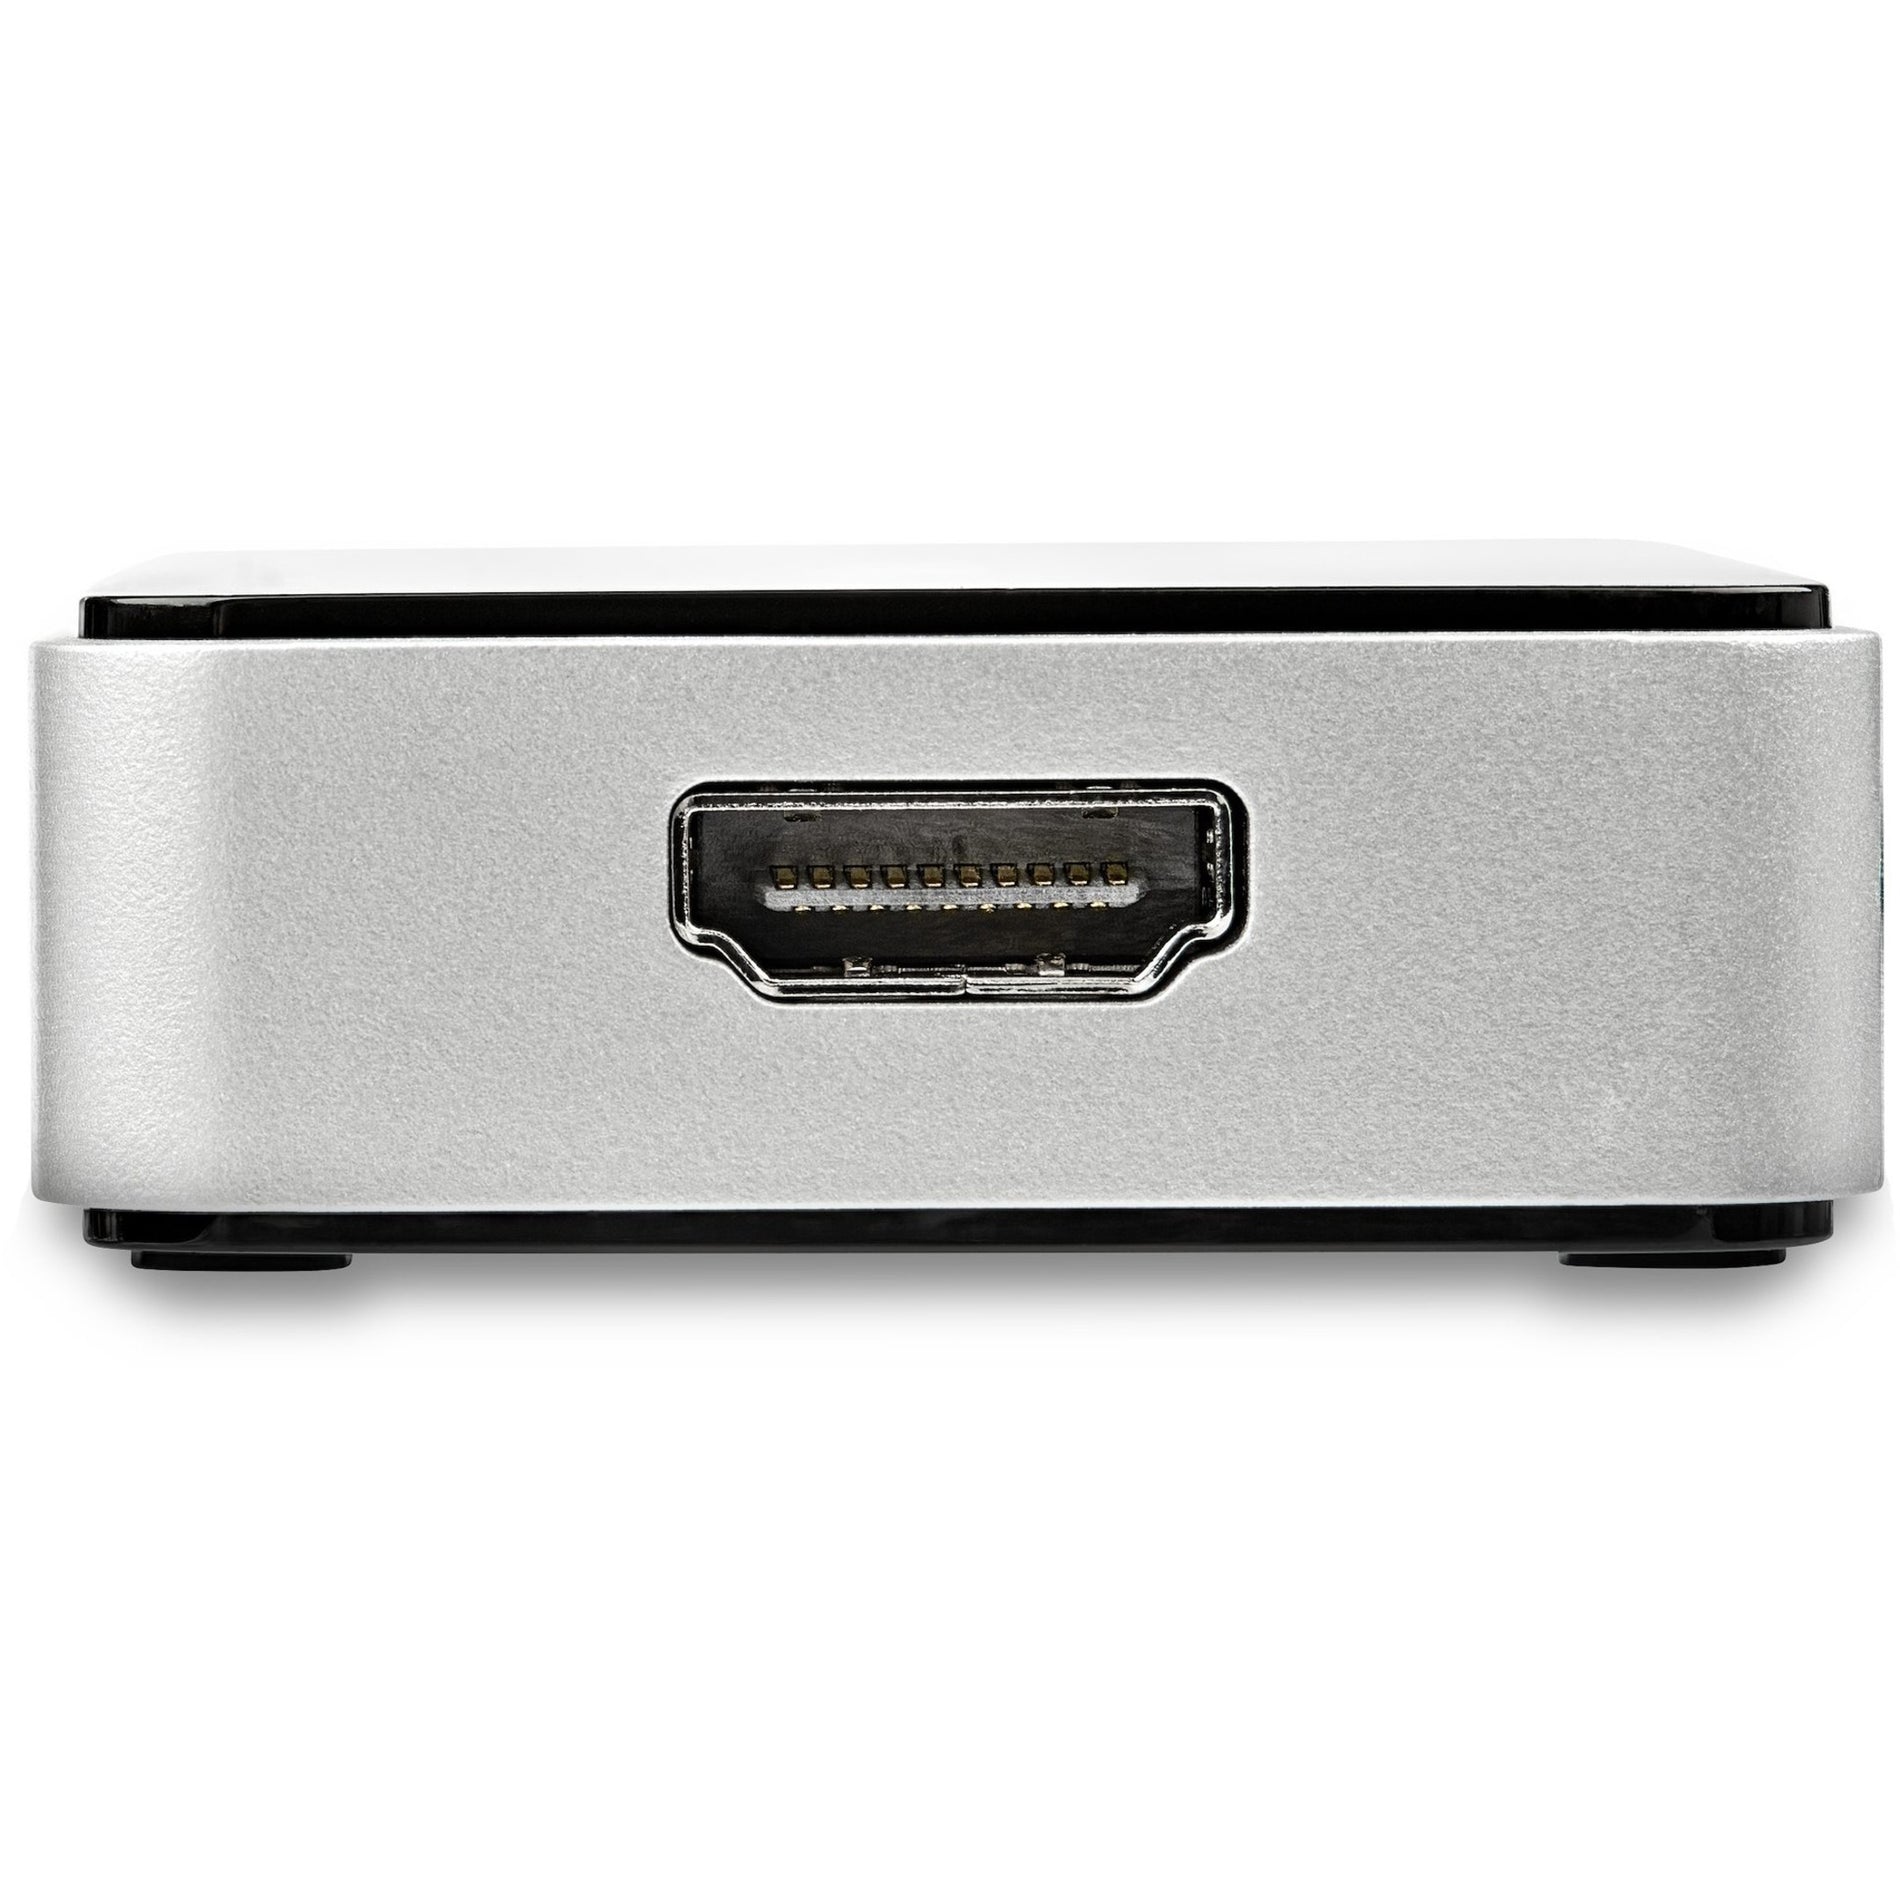 Adaptateur USB StarTech.com USB32HDEH USB 3.0 vers HDMI Carte vidéo multi-écrans avec hub USB à 1 port